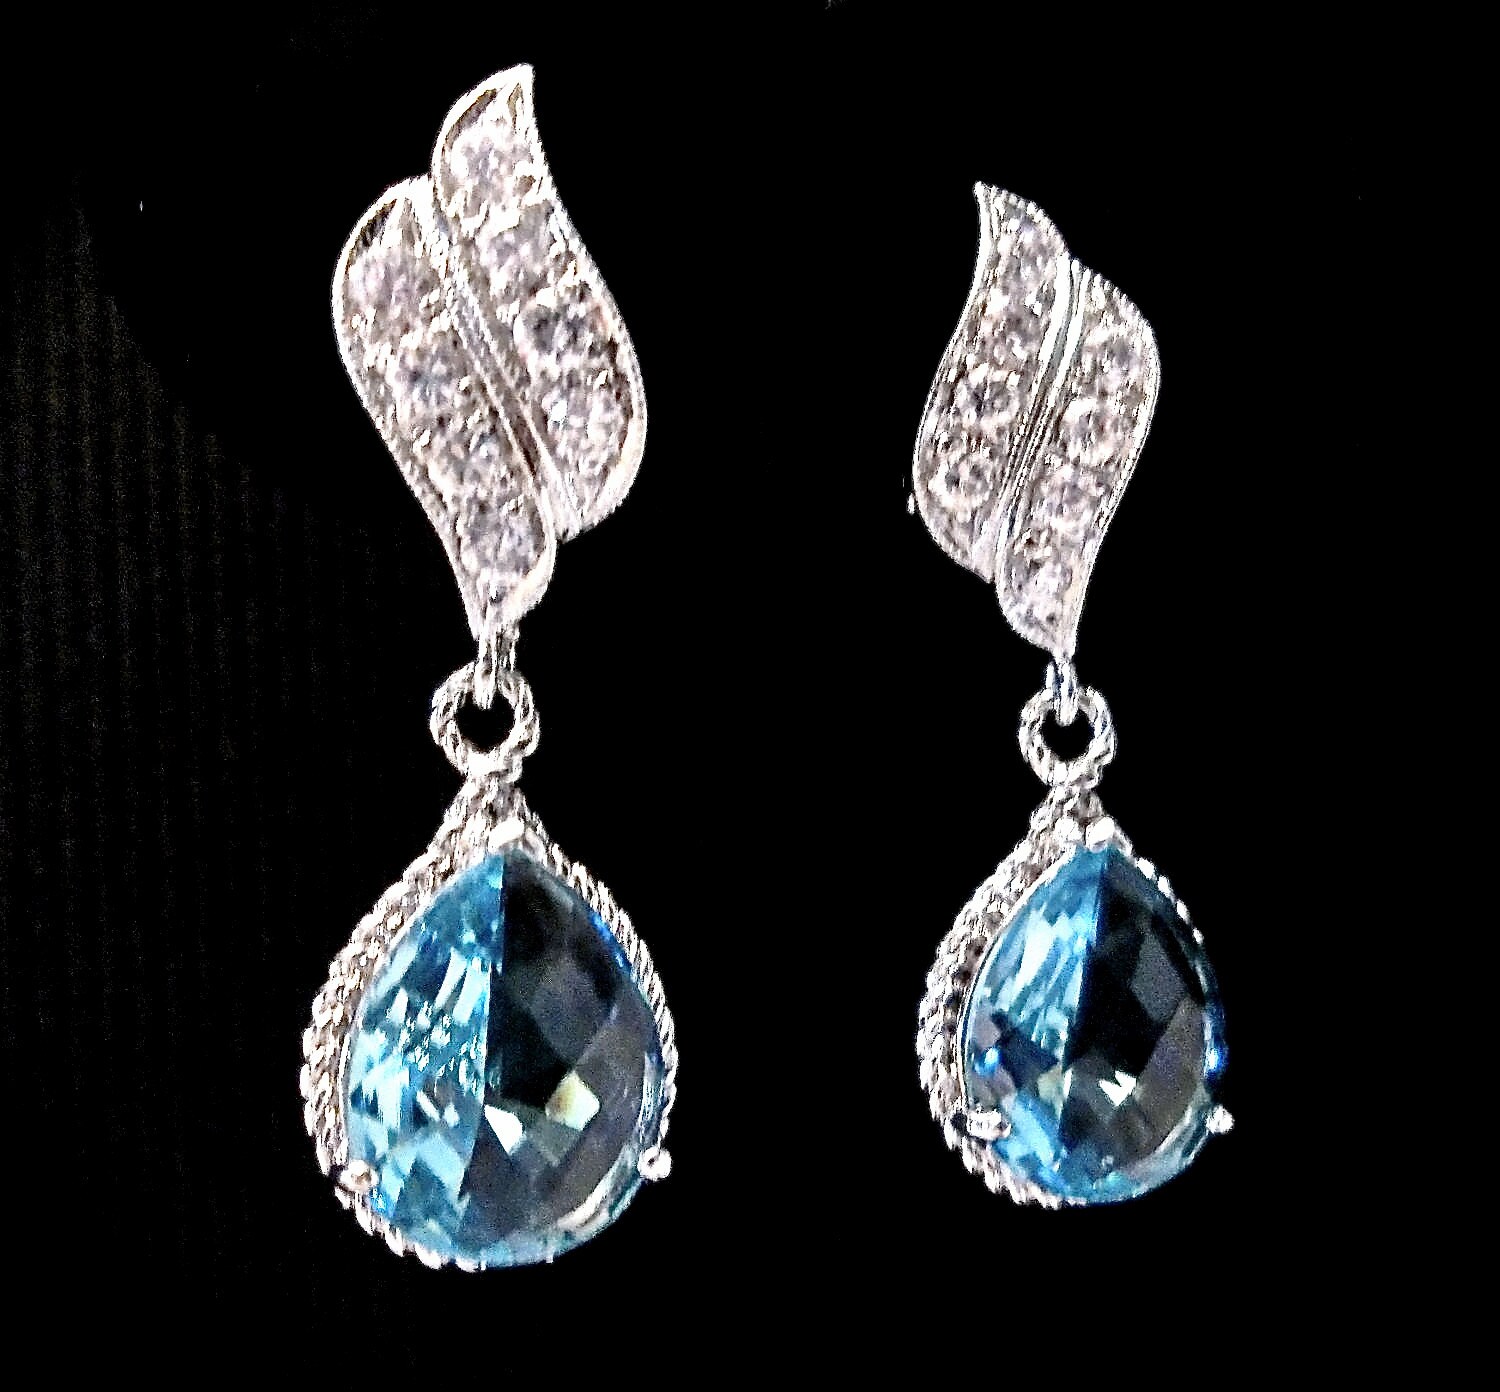 Aquamarine Earrings Czech glass Teardrops Beautiful wave